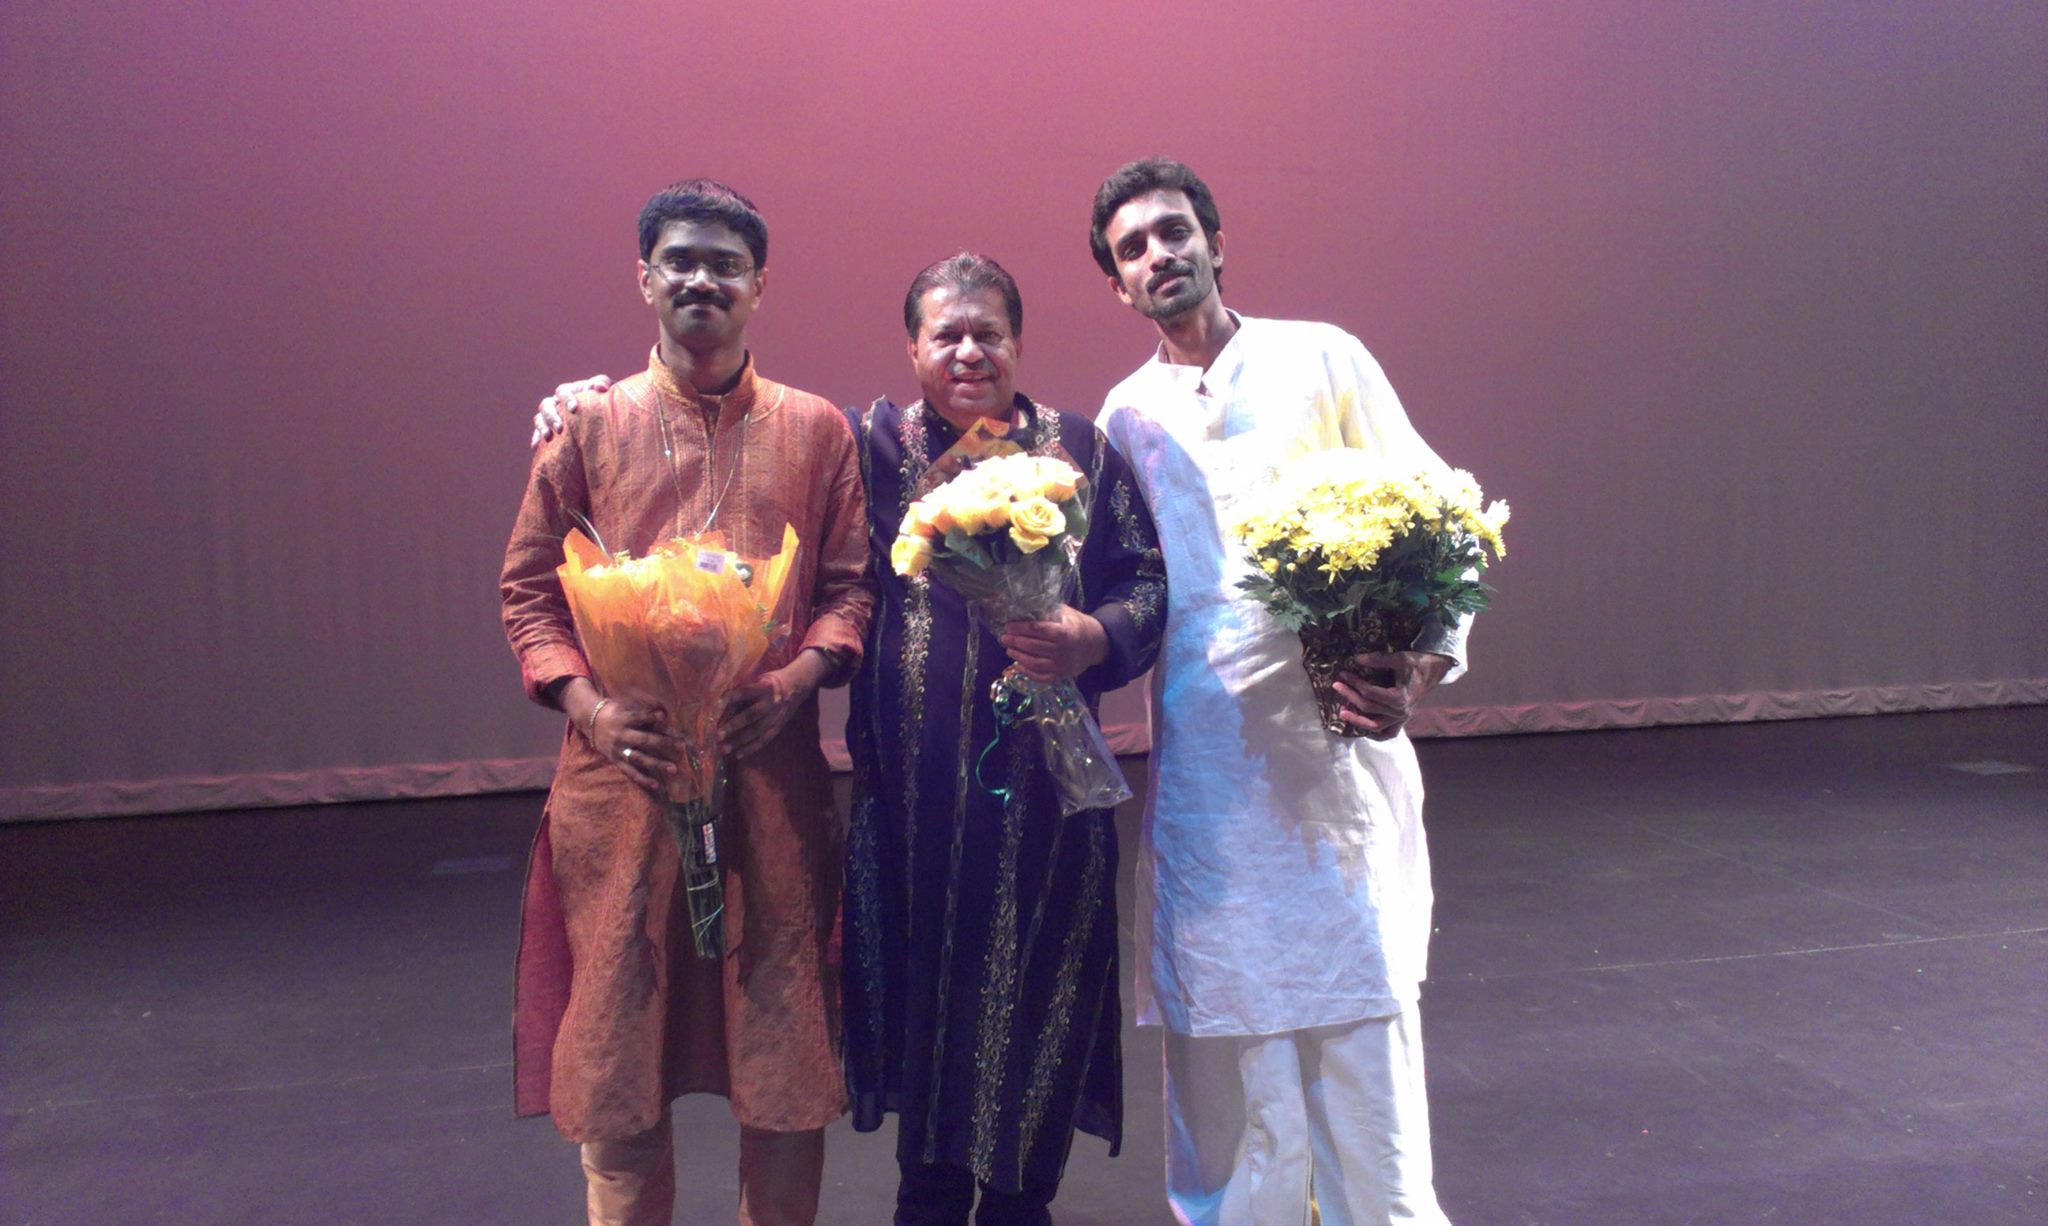 Festivals of India - Downey, LA - Sep 2013